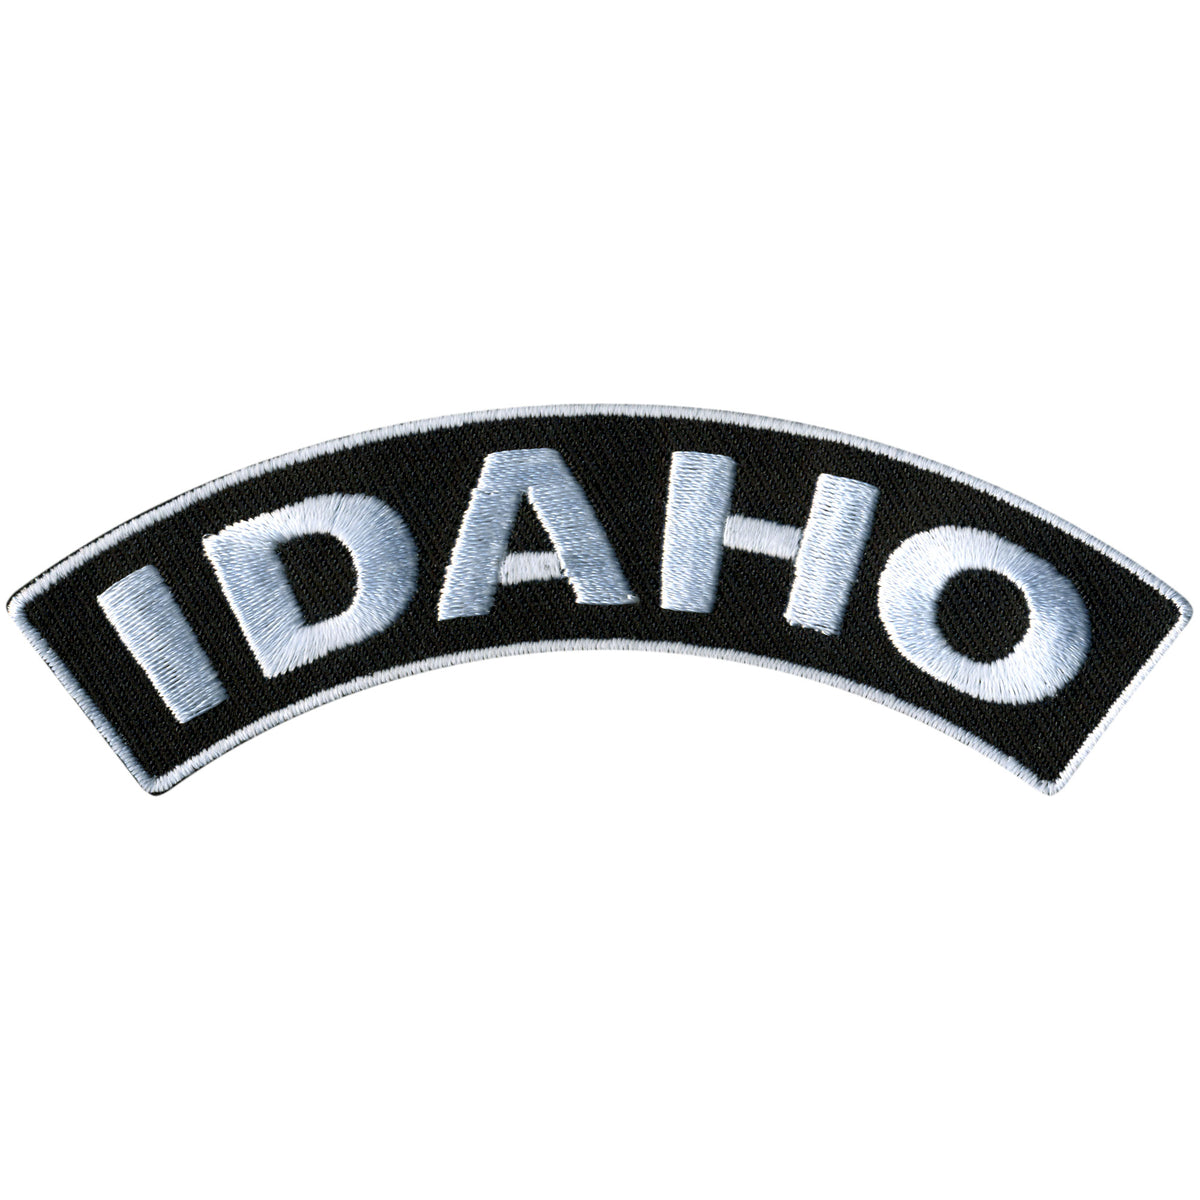 Hot Leathers Idaho 4” X 1” Top Rocker Patch